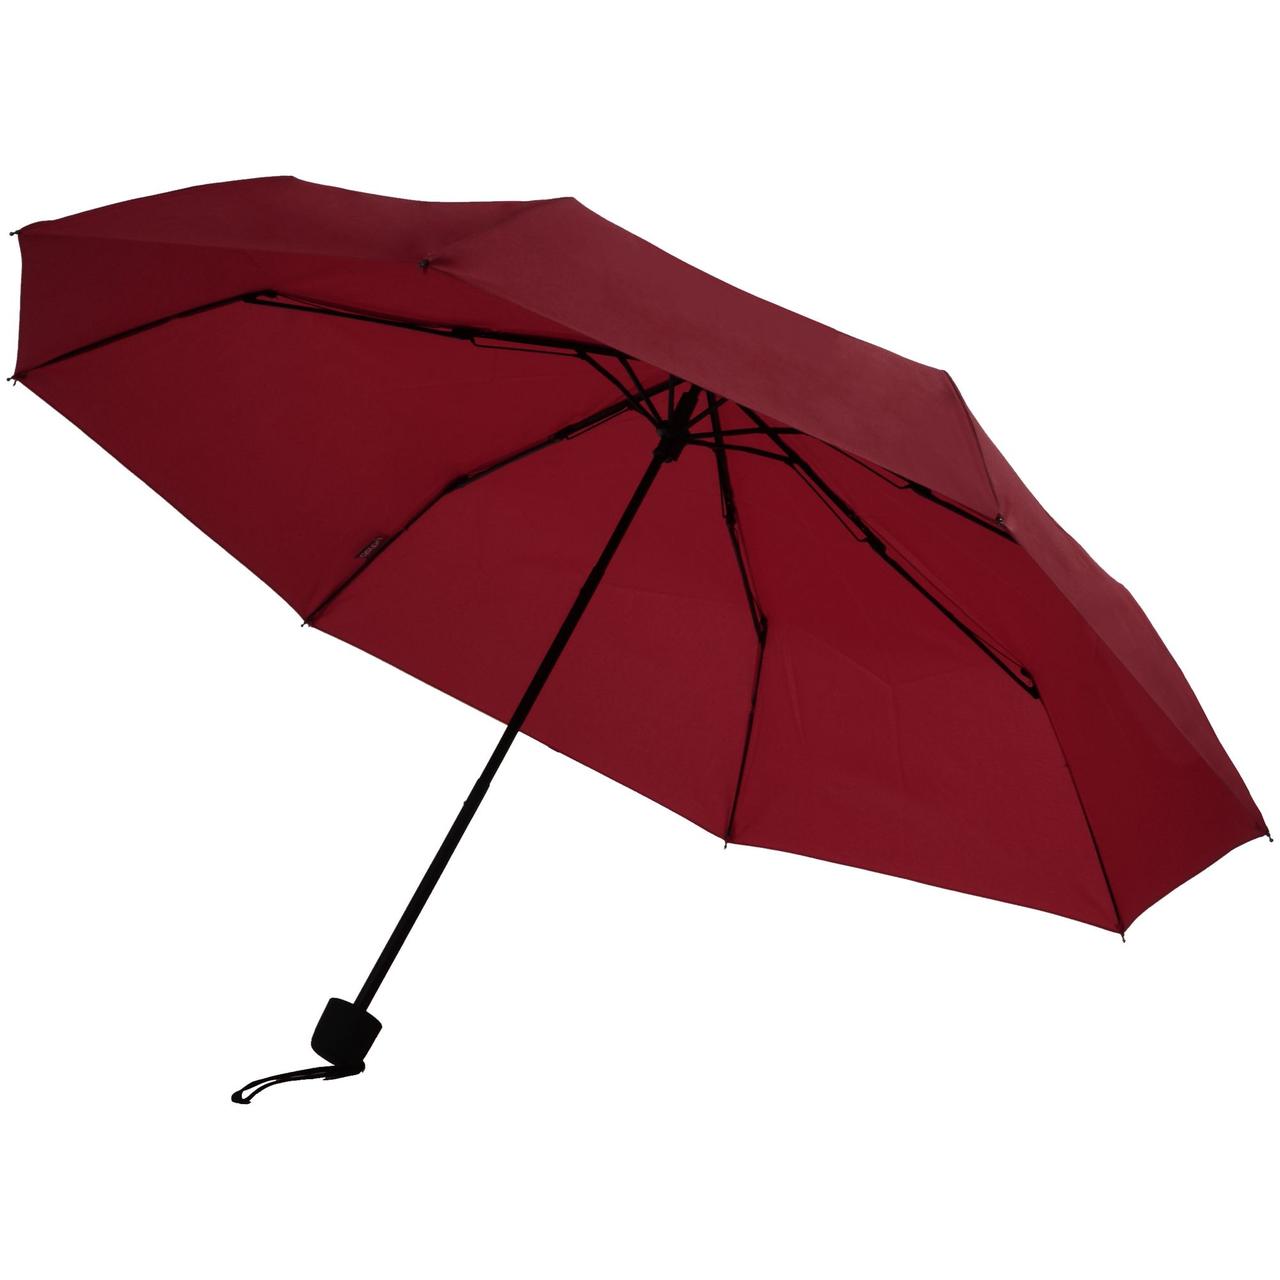 Зонт складной Hit Mini, бордовый (артикул 11839.55), фото 1